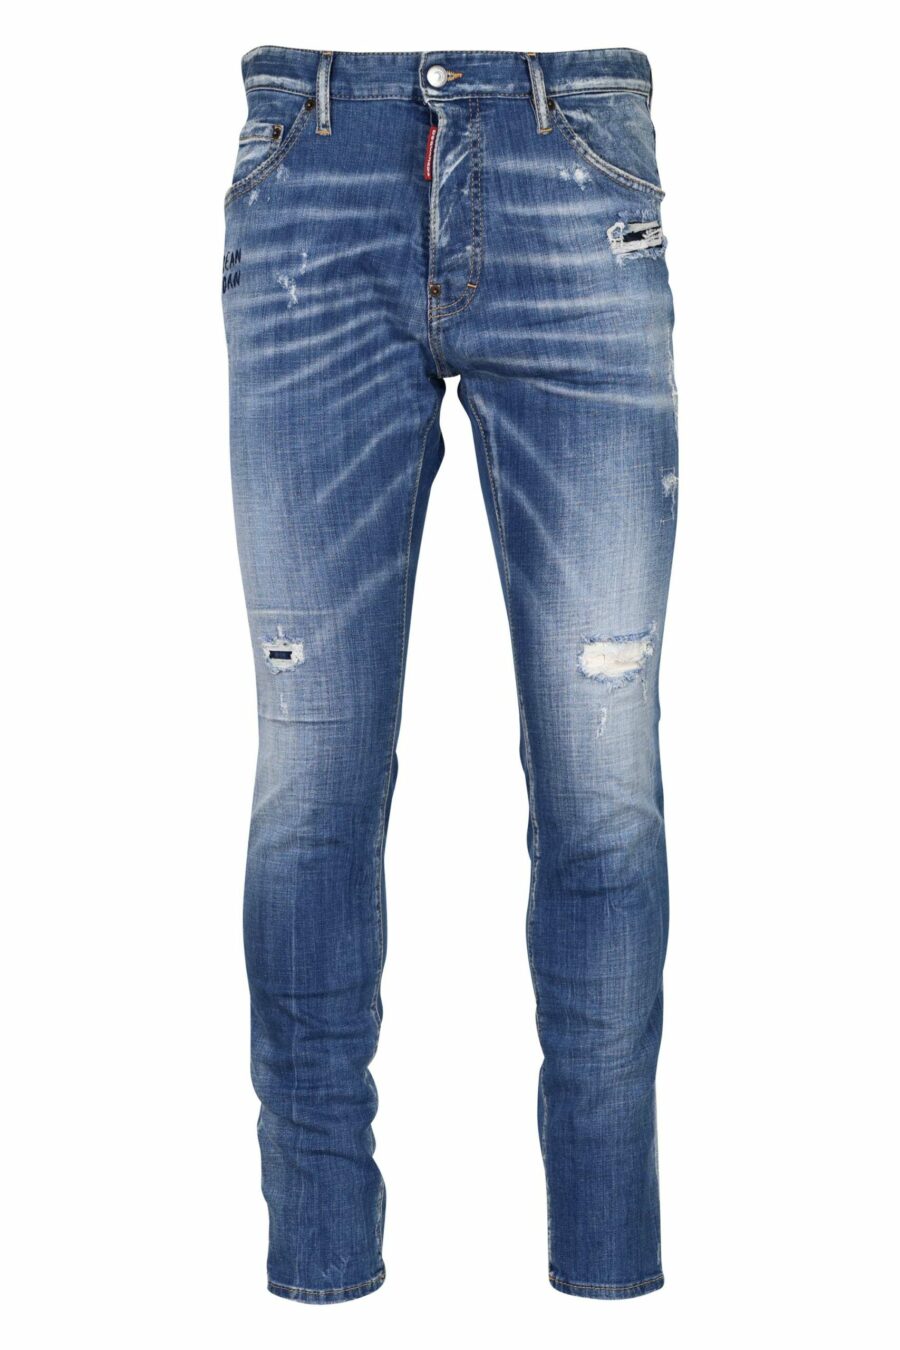 Pantalón vaquero azul claro "cool guy jean" con semirotos y semidesgastado - 8054148311414 scaled